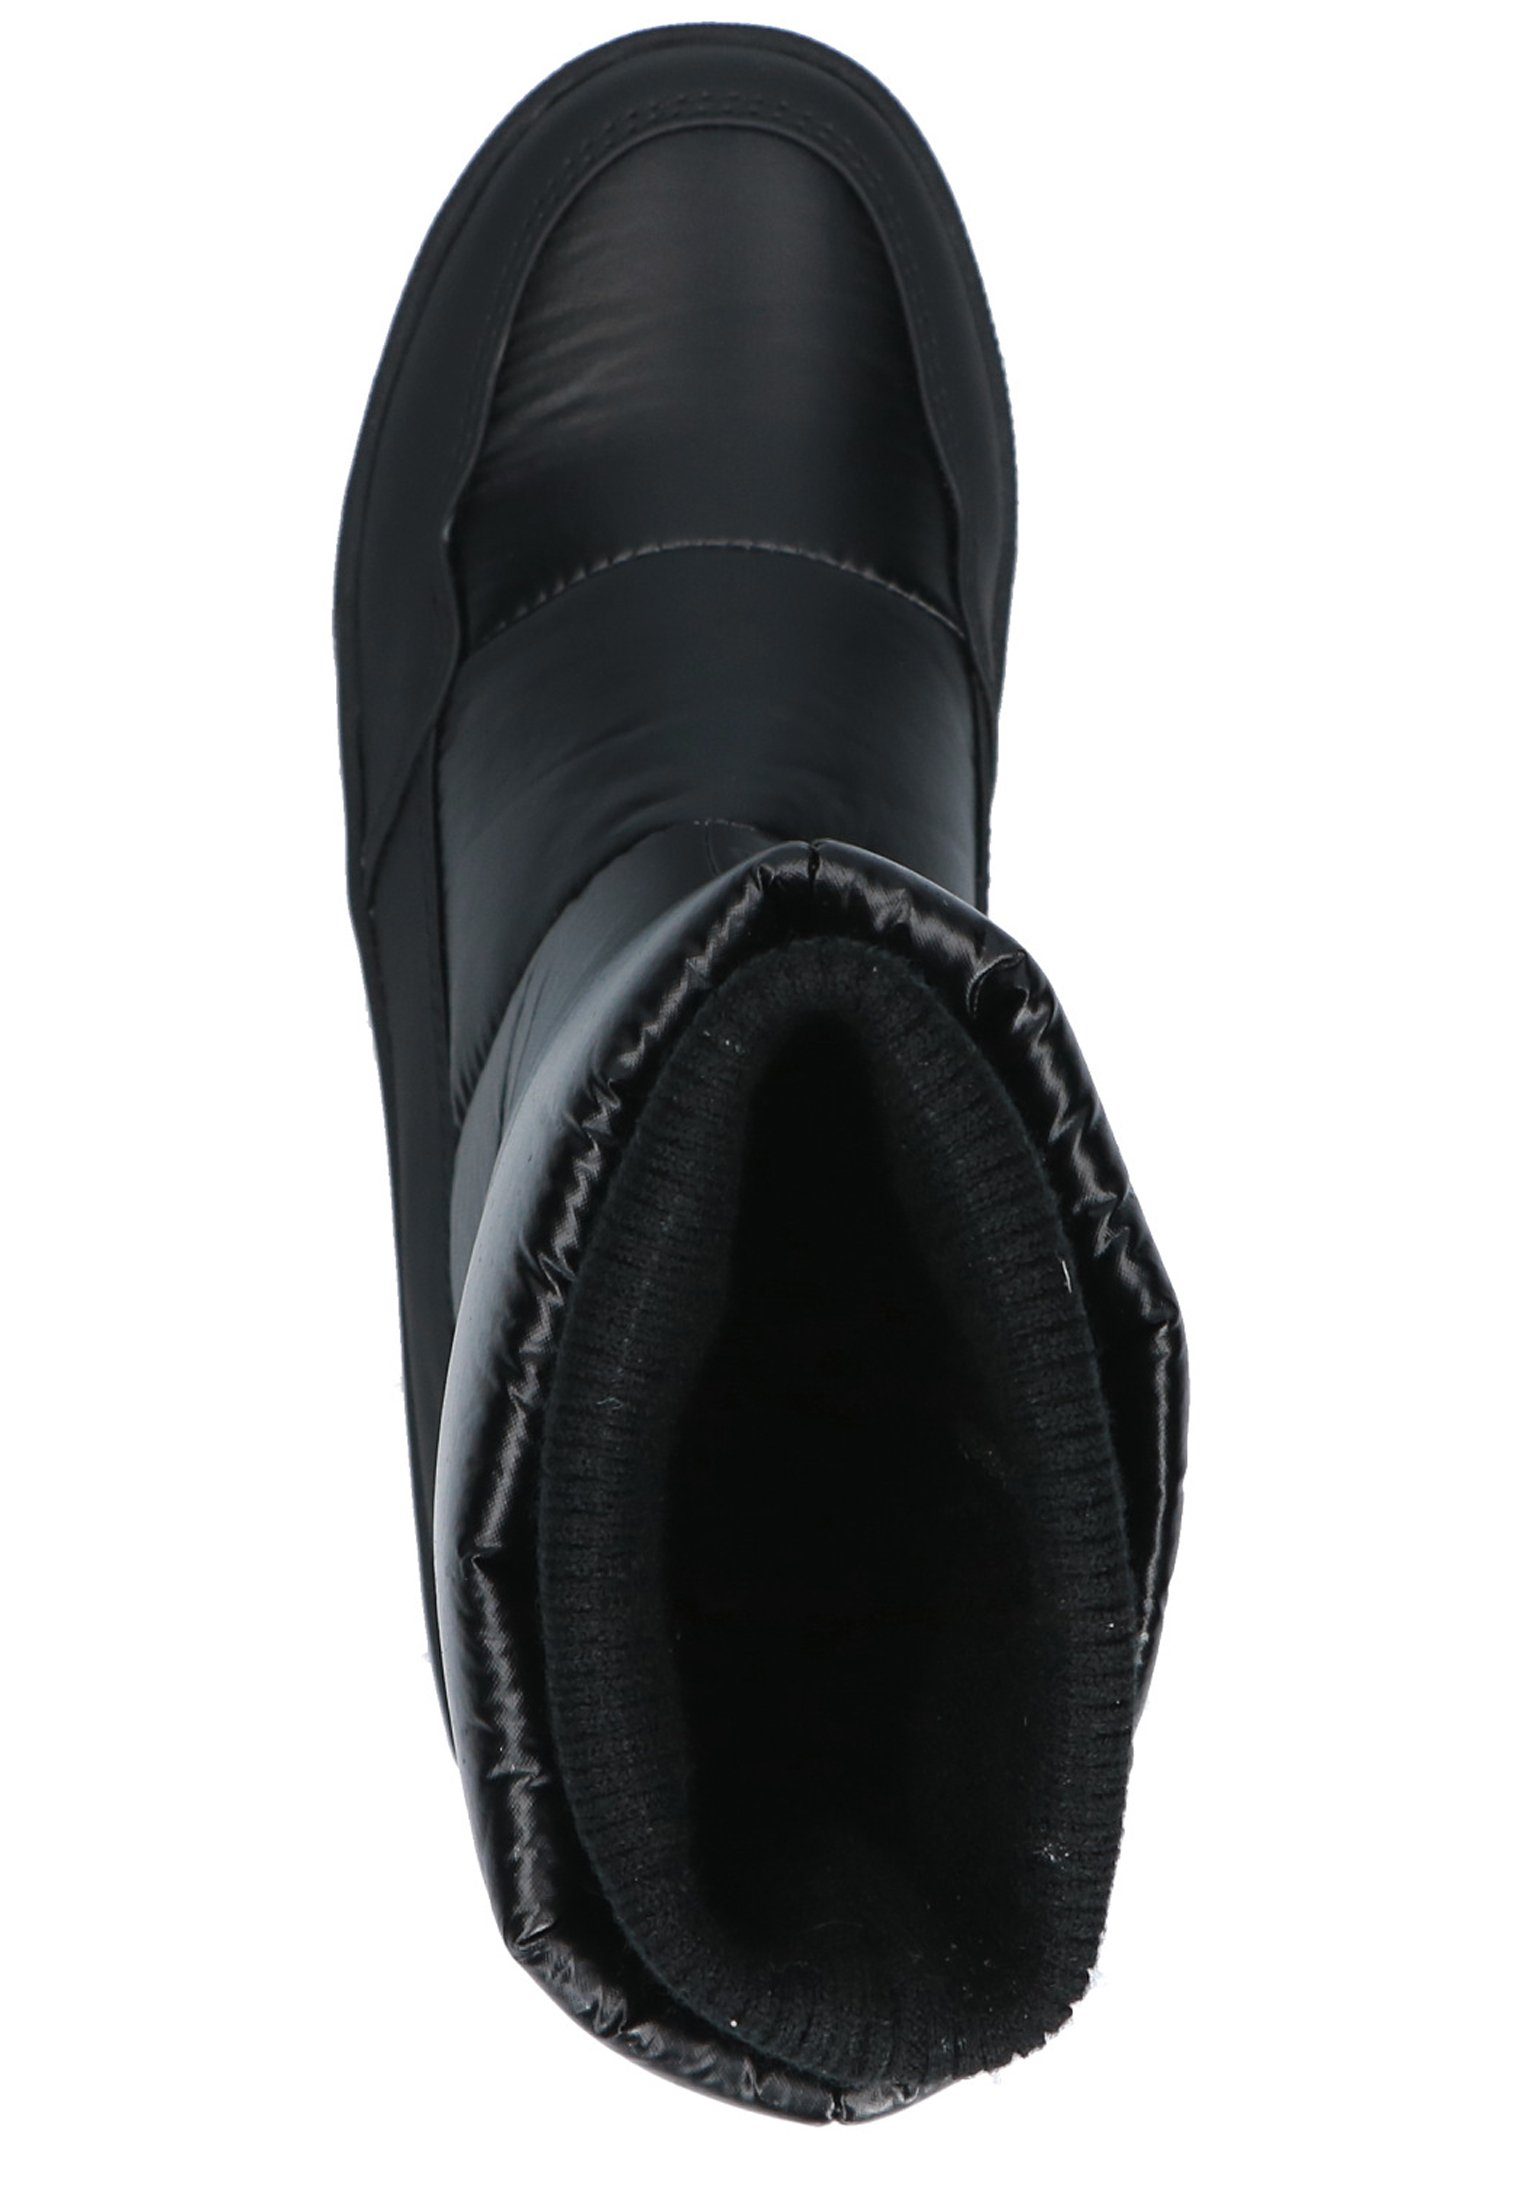 Stiefel 055 Caprice Black/Black 9-26480-29